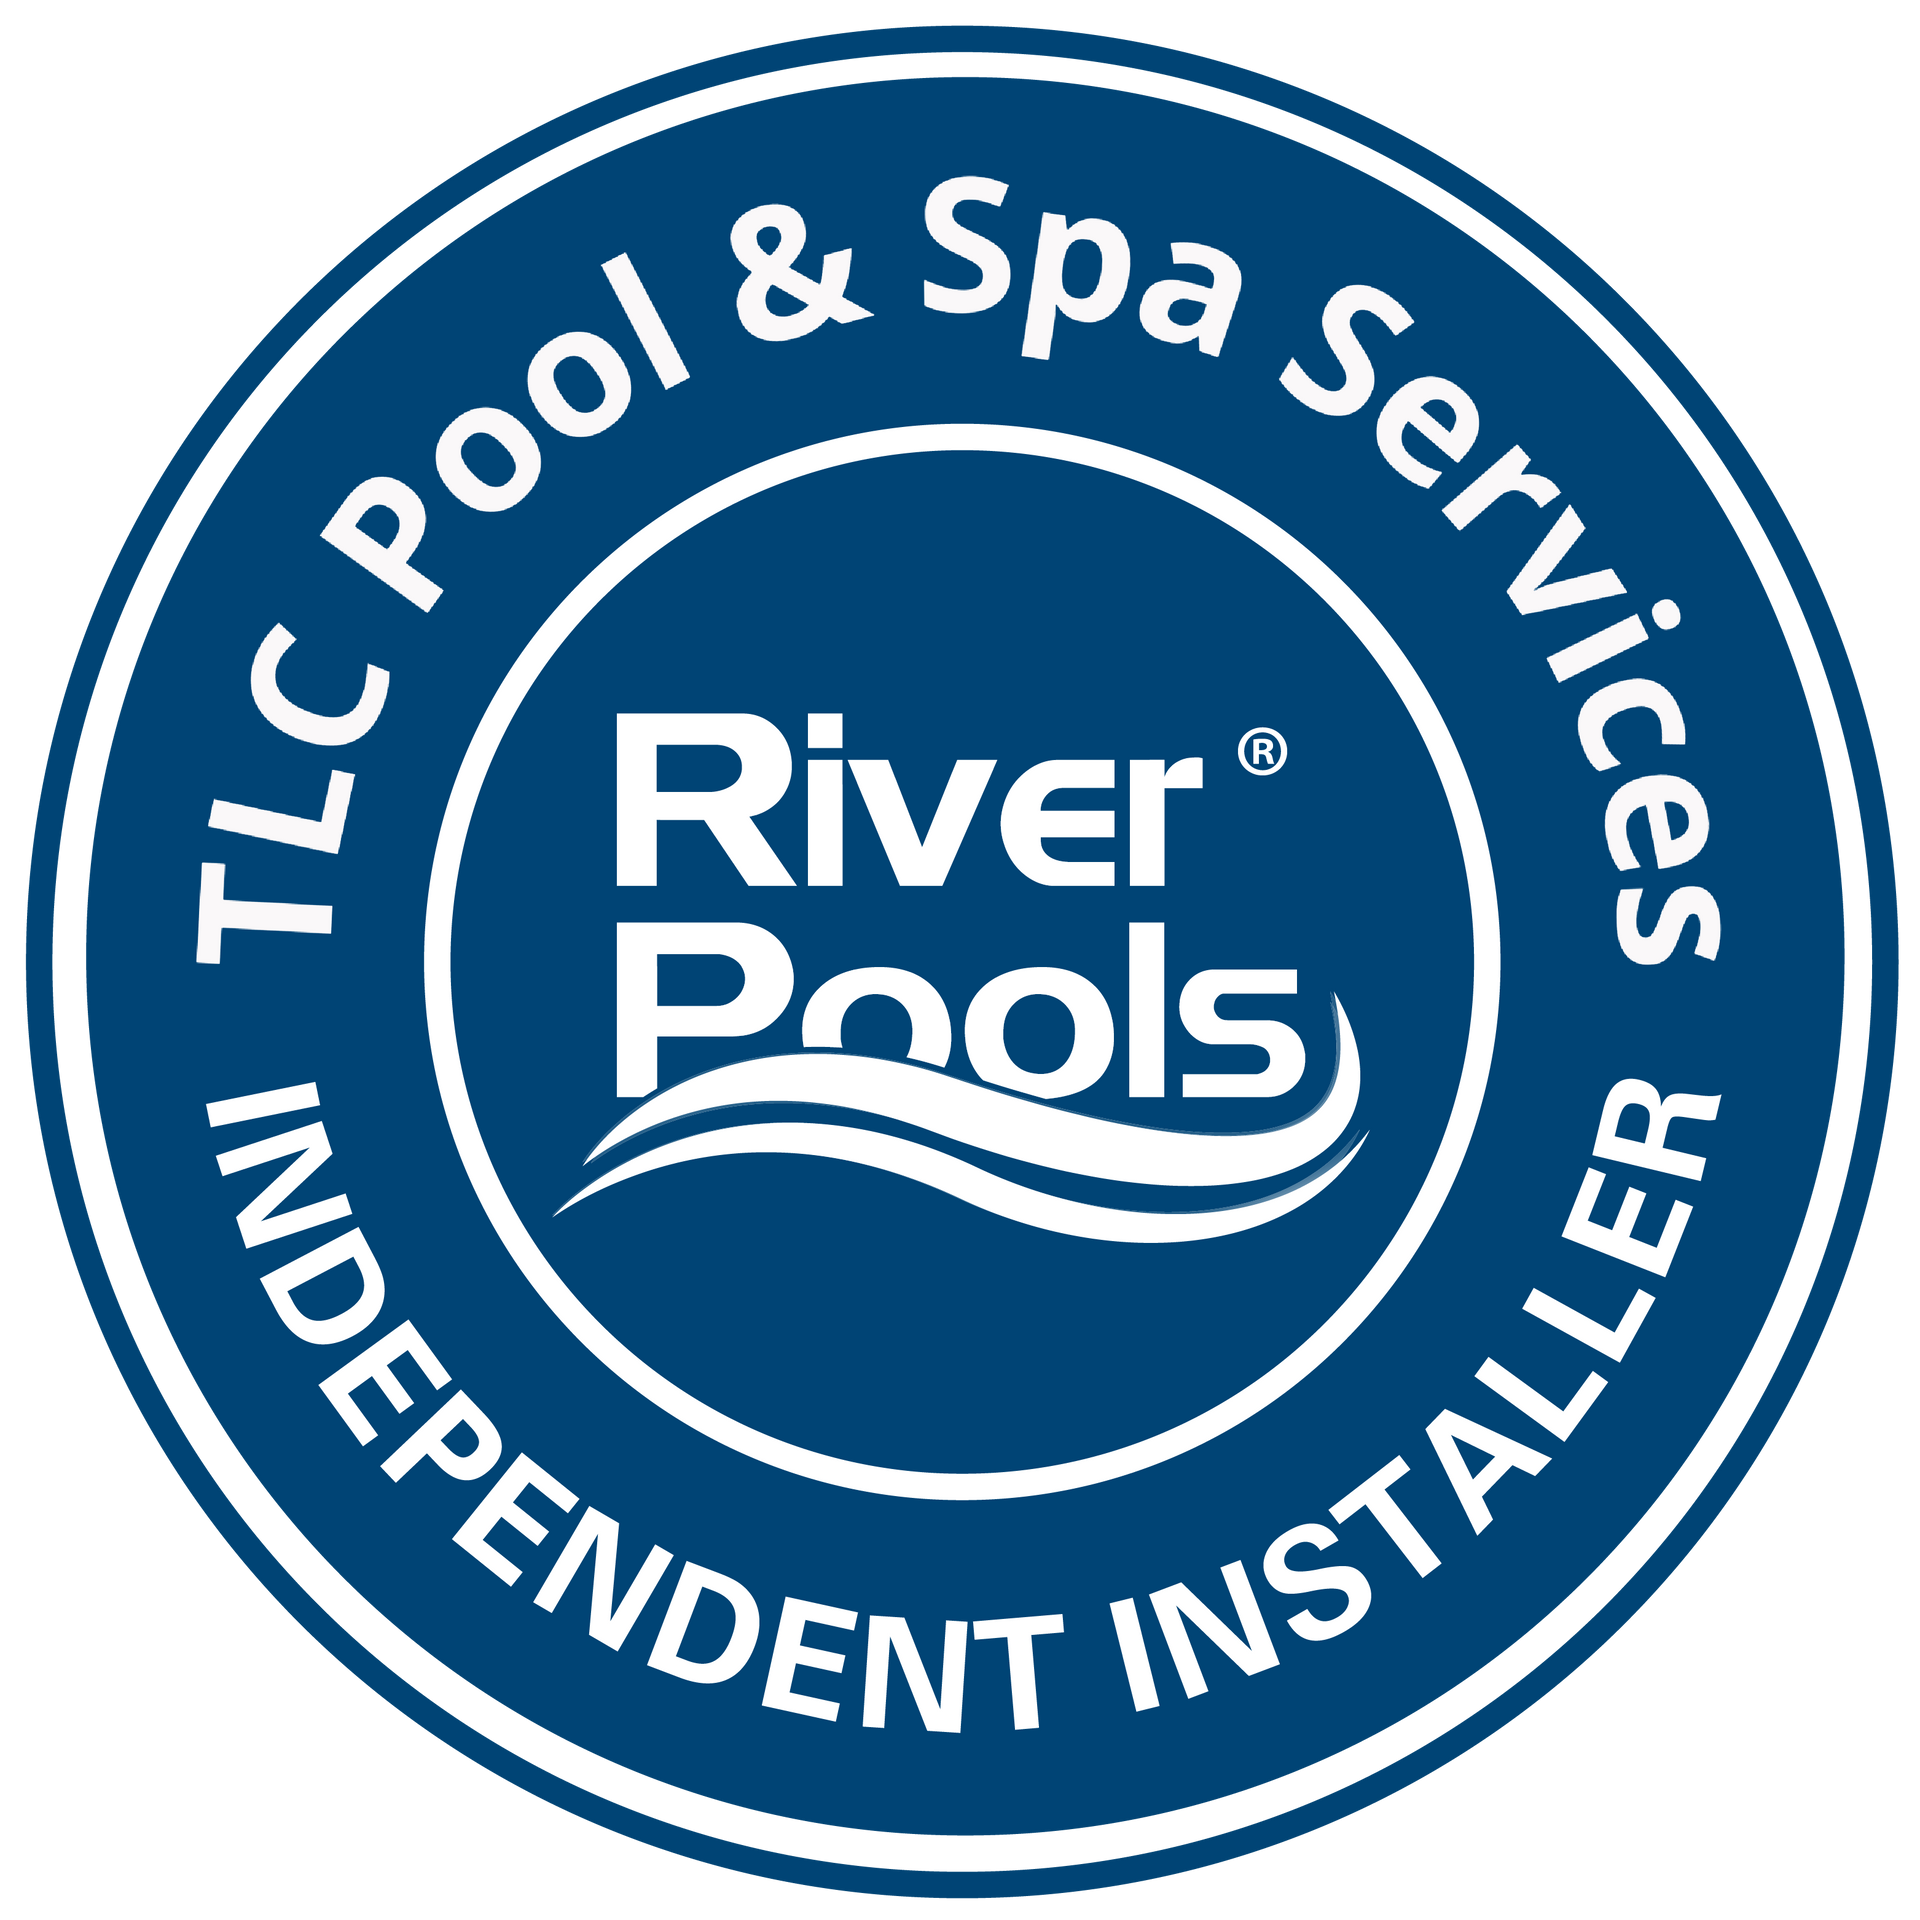 TLC Pool & Spa Services Independent Installer logo